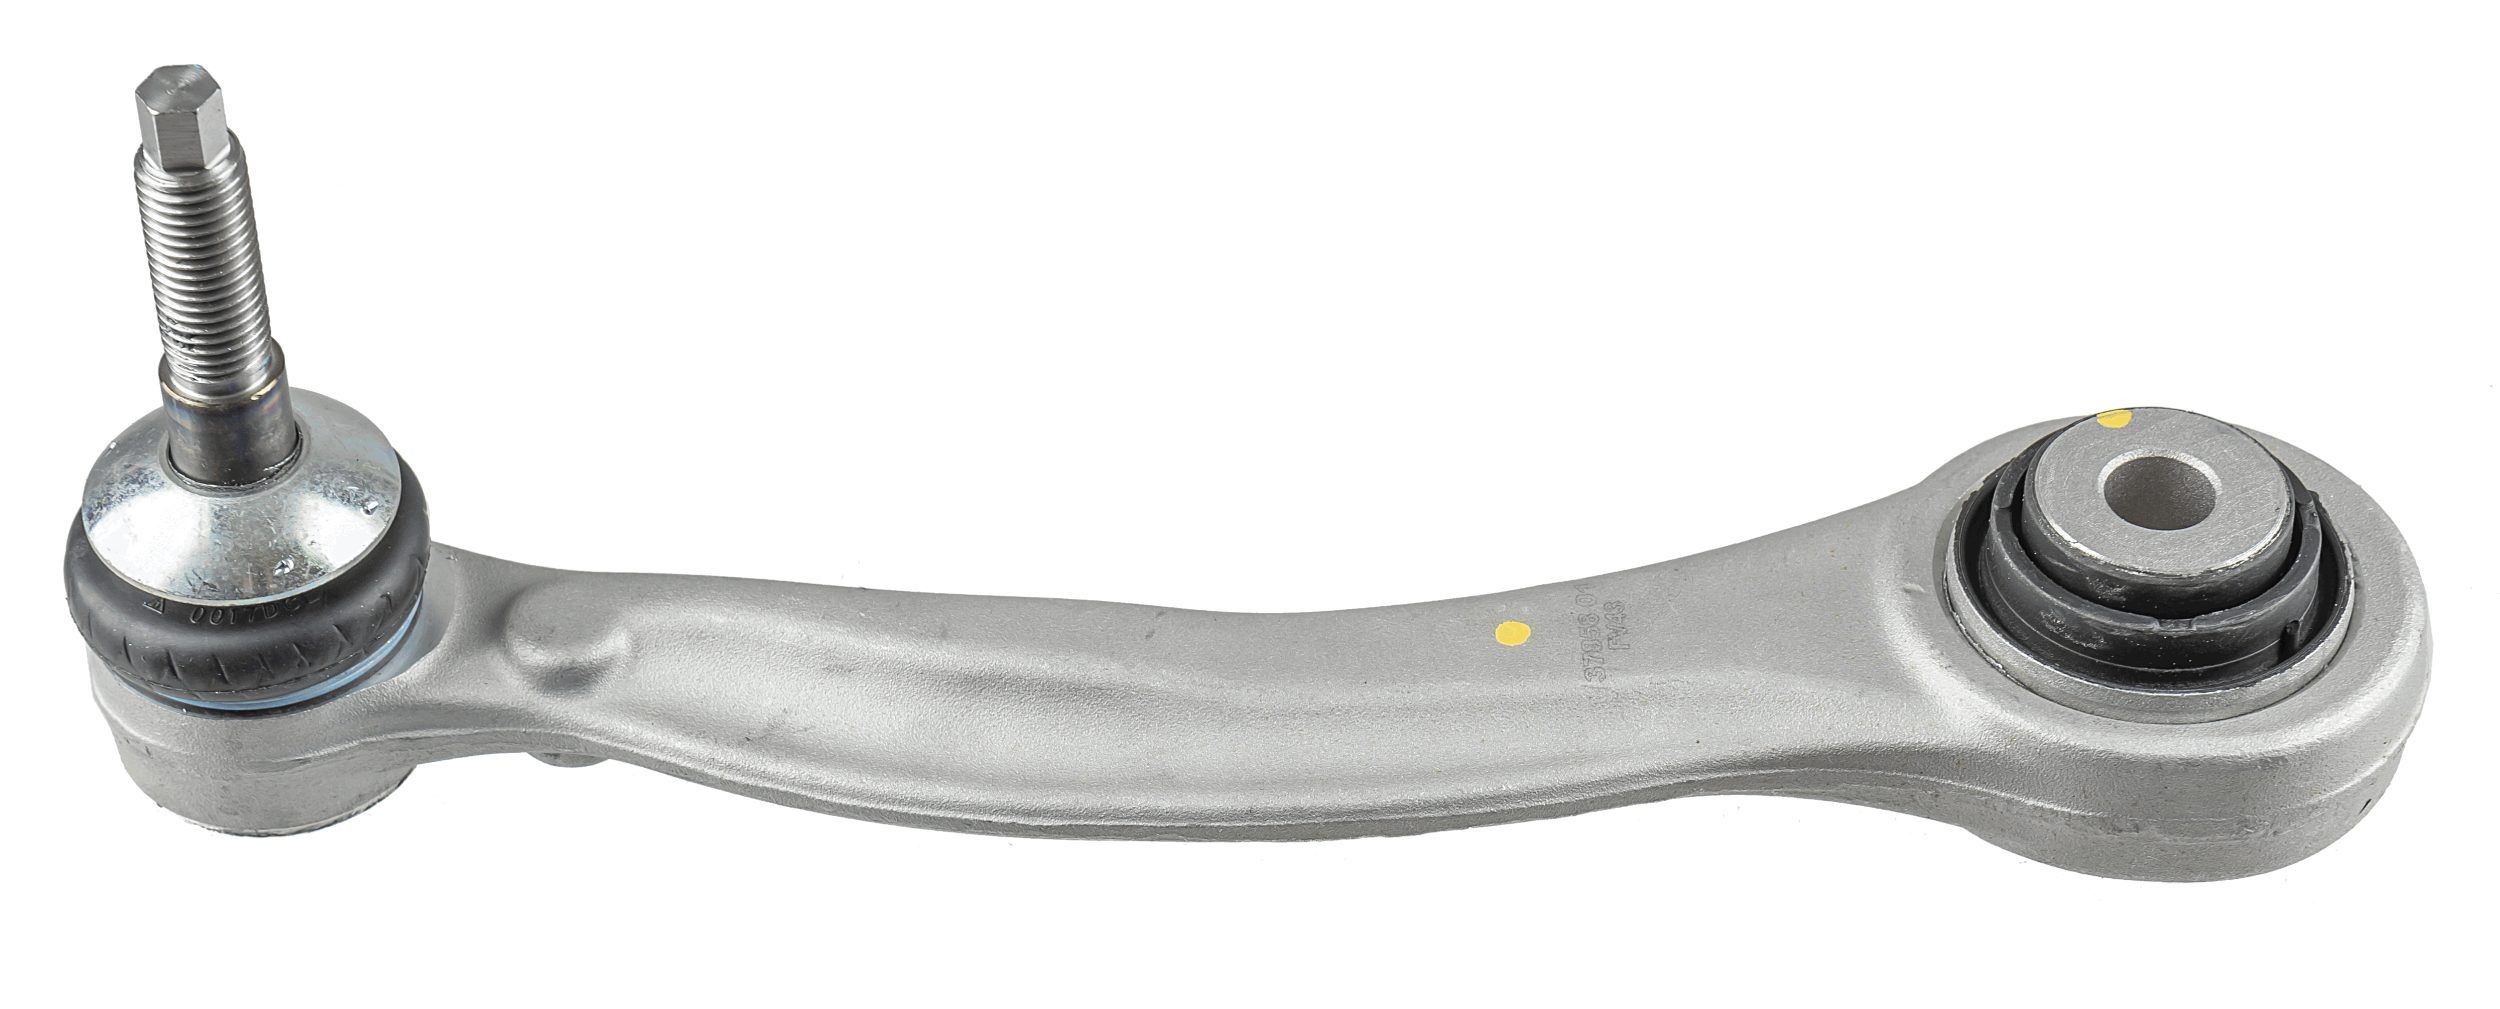 LEMFÖRDER 37858 01 Suspension arm Rear Axle, Left, Upper, Front, Control Arm, Aluminium